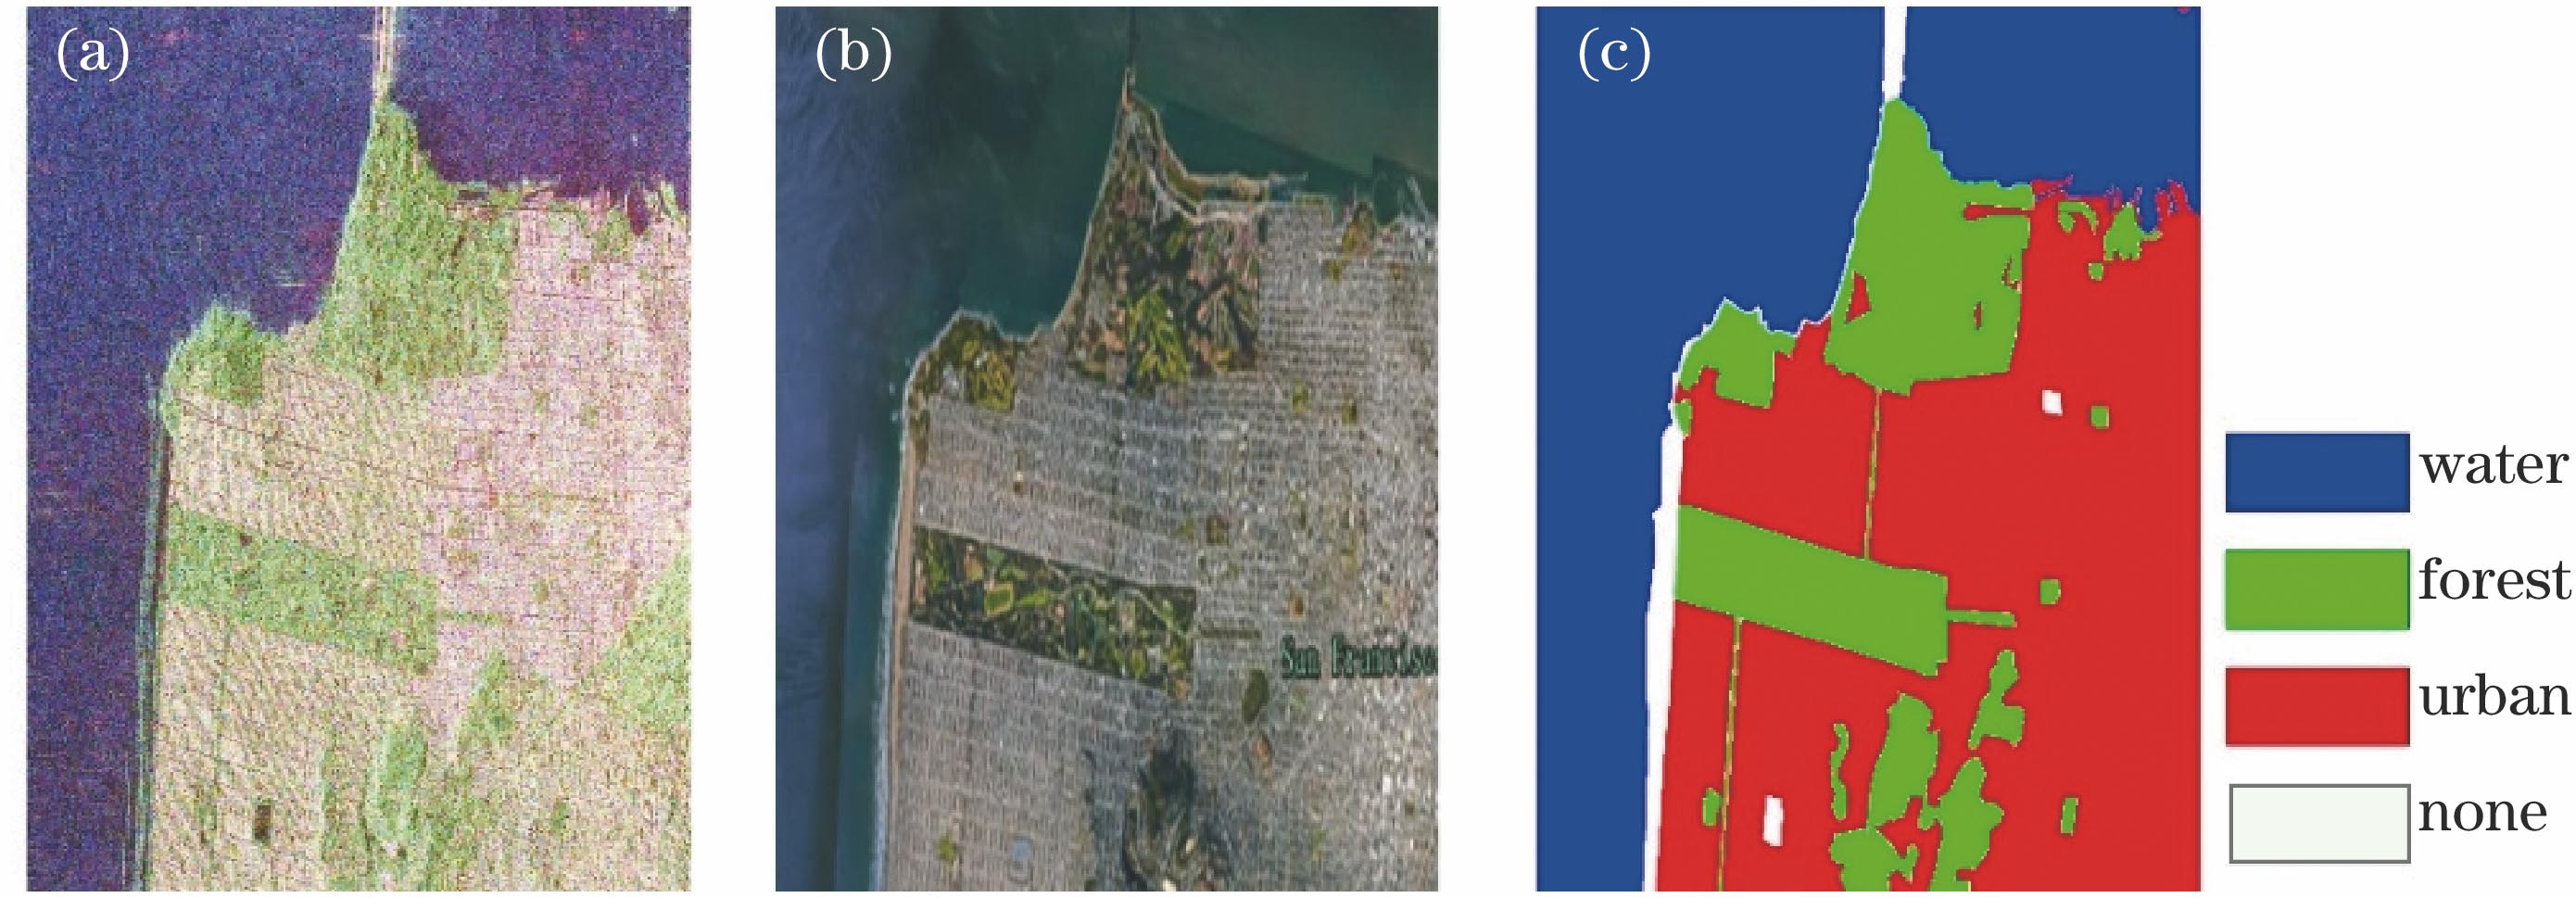 Polarimetric SAR images from Radarsat-2 in San Francisco. (a) Pauli pseudo color image; (b) corresponding map; (c) ground truth